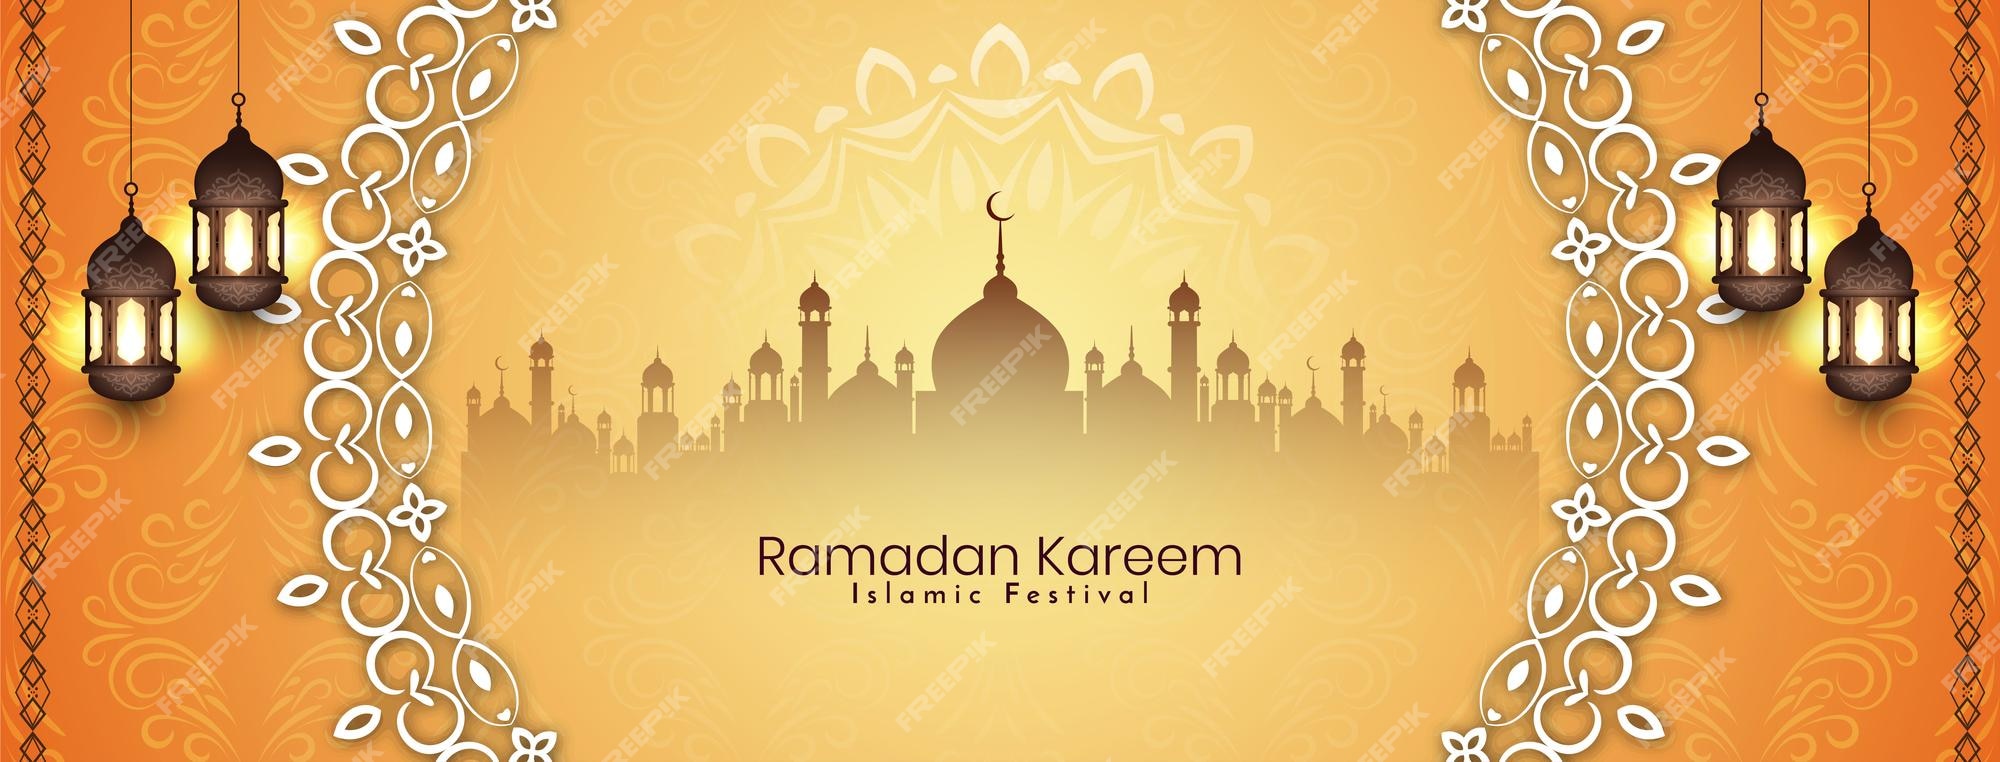 Free Vector | Ramadan kareem islamic festival elegant decorative ...